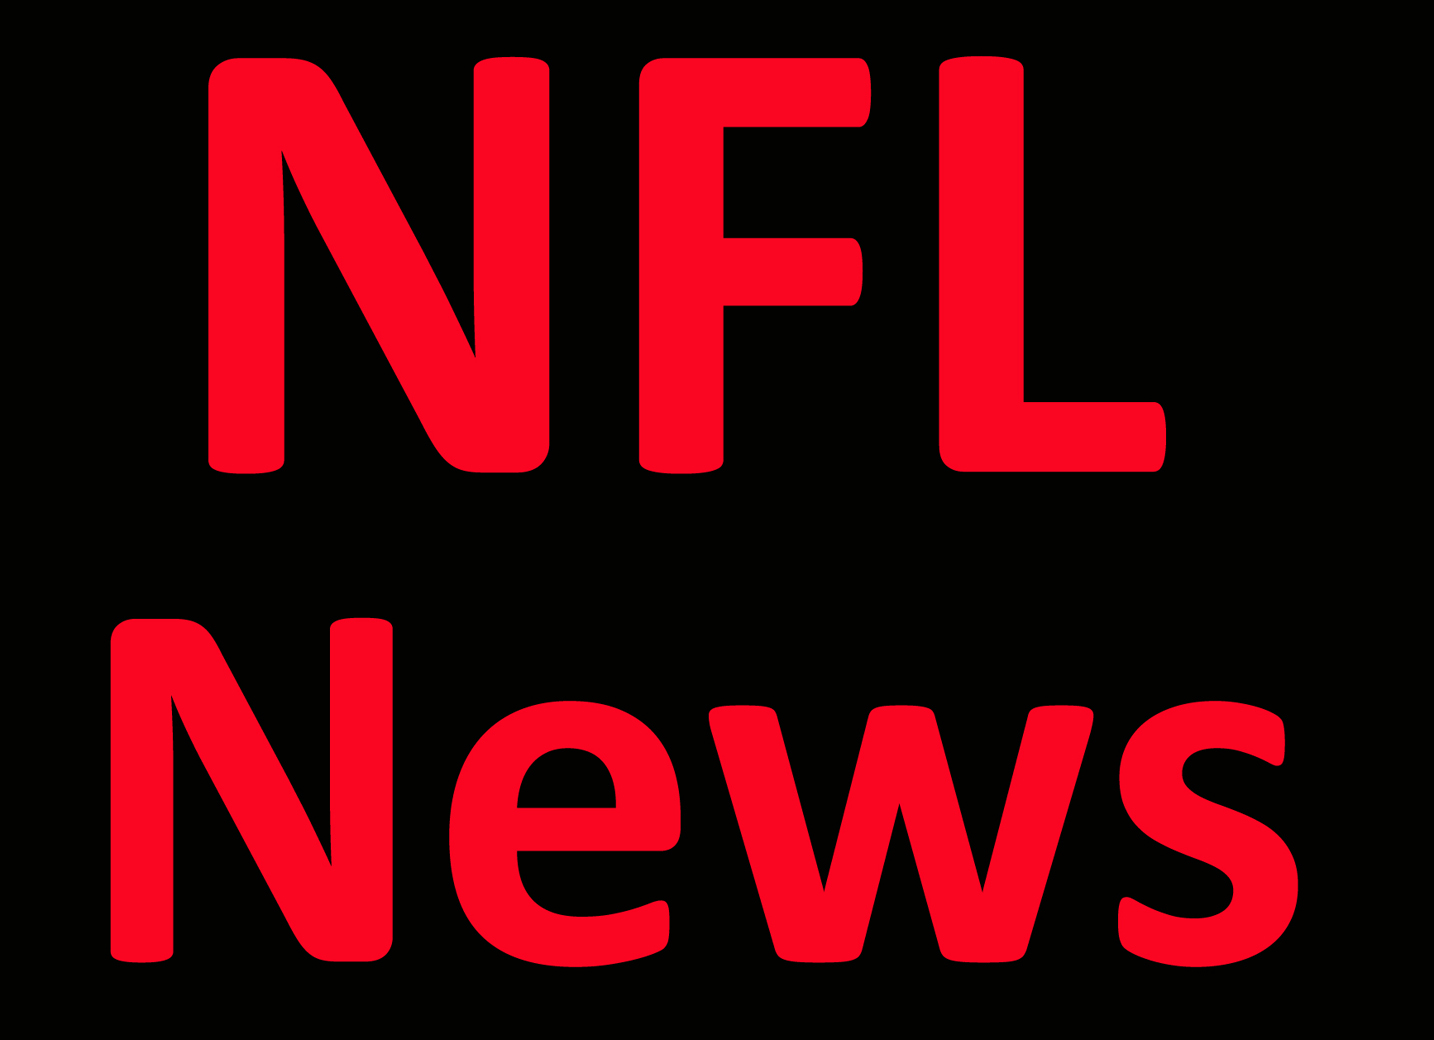 NFL News: Bears’ Nagy: Report of imminent firing not true Per Report